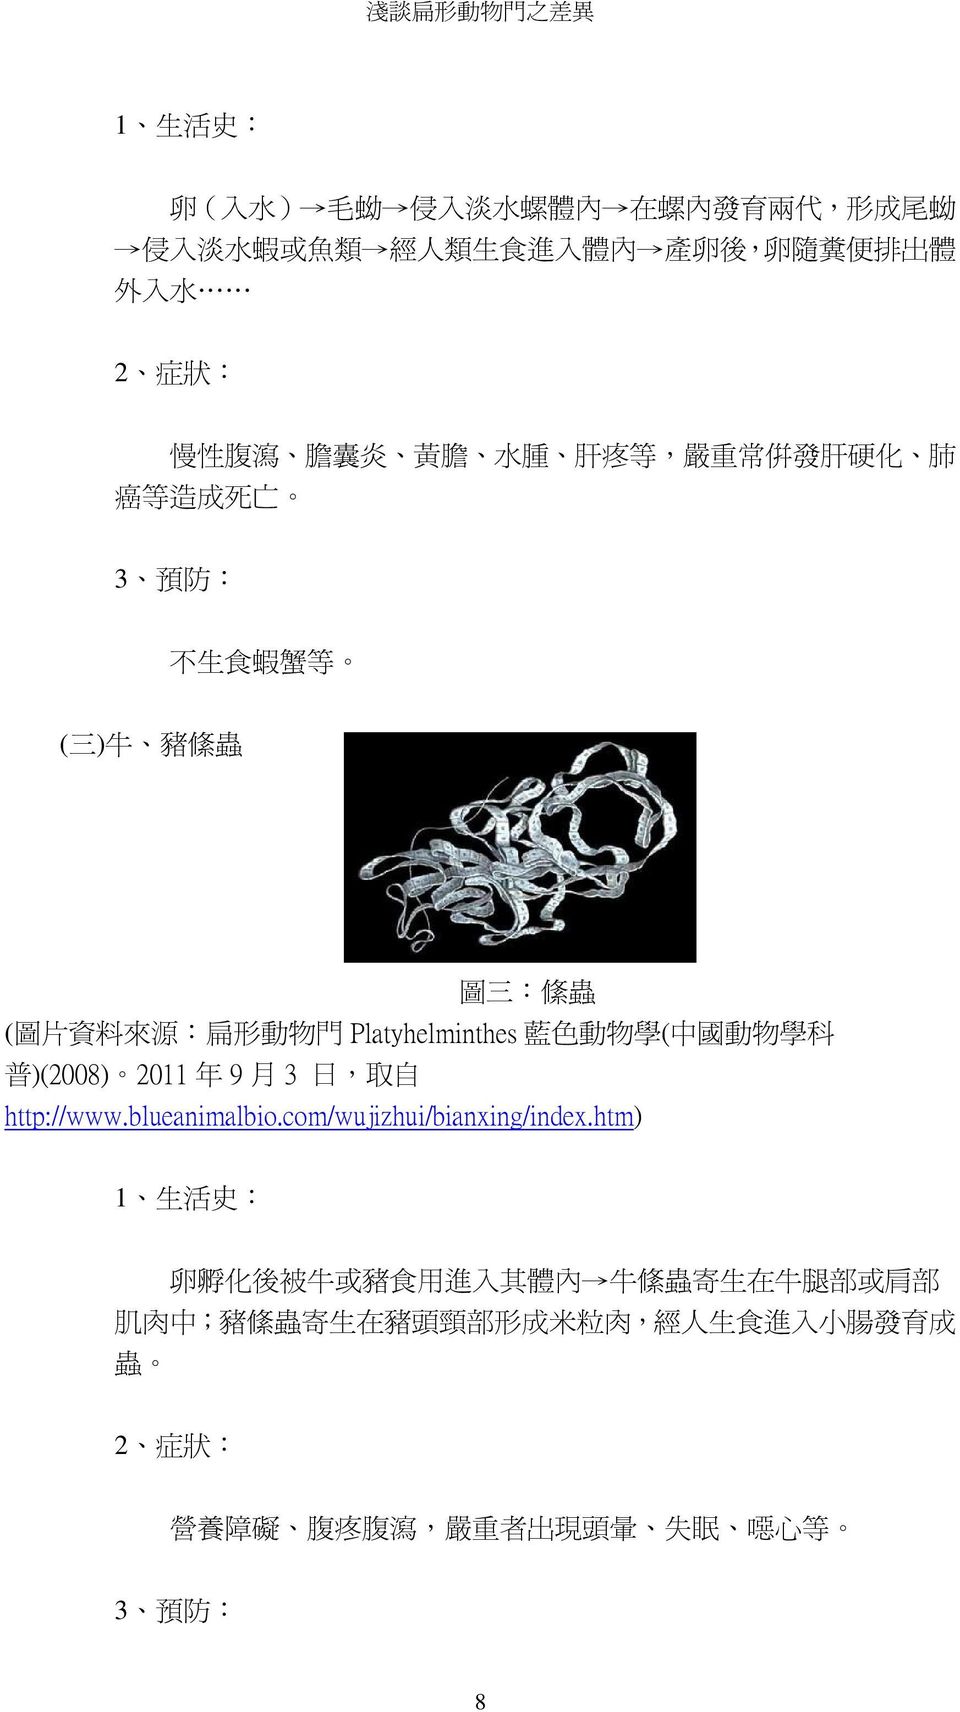 ( 中 國 動 物 學 科 普 )(2008) 2011 年 9 月 3 日, 取 自 http://www.blueanimalbio.com/wujizhui/bianxing/index.